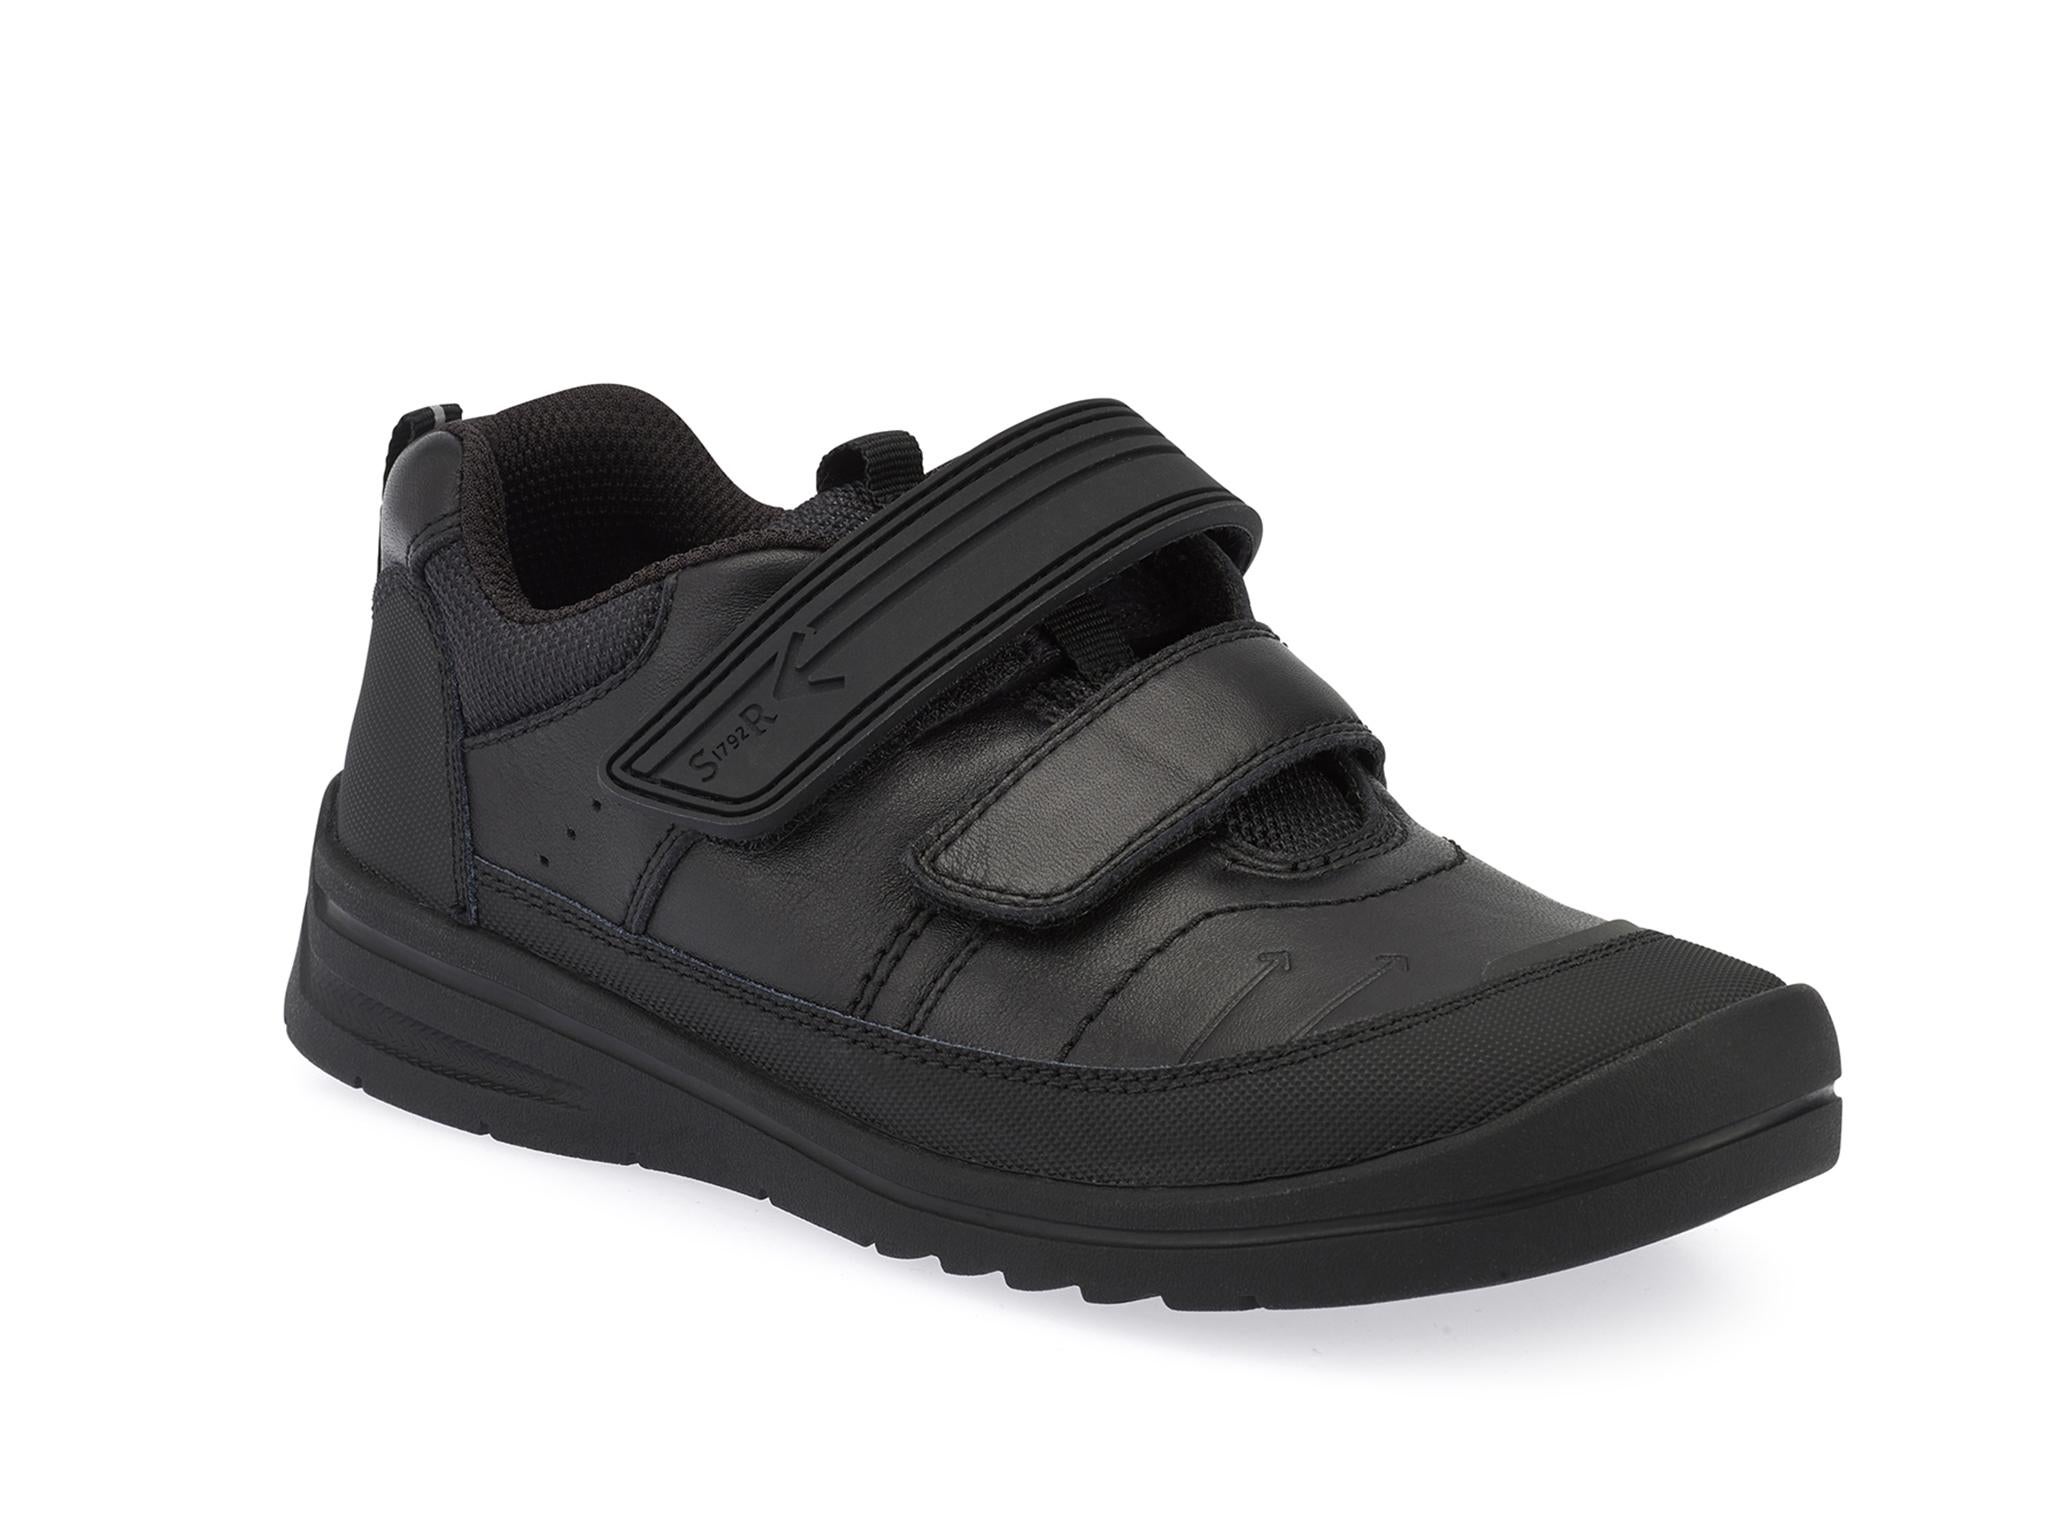 kickers school shoes size 3